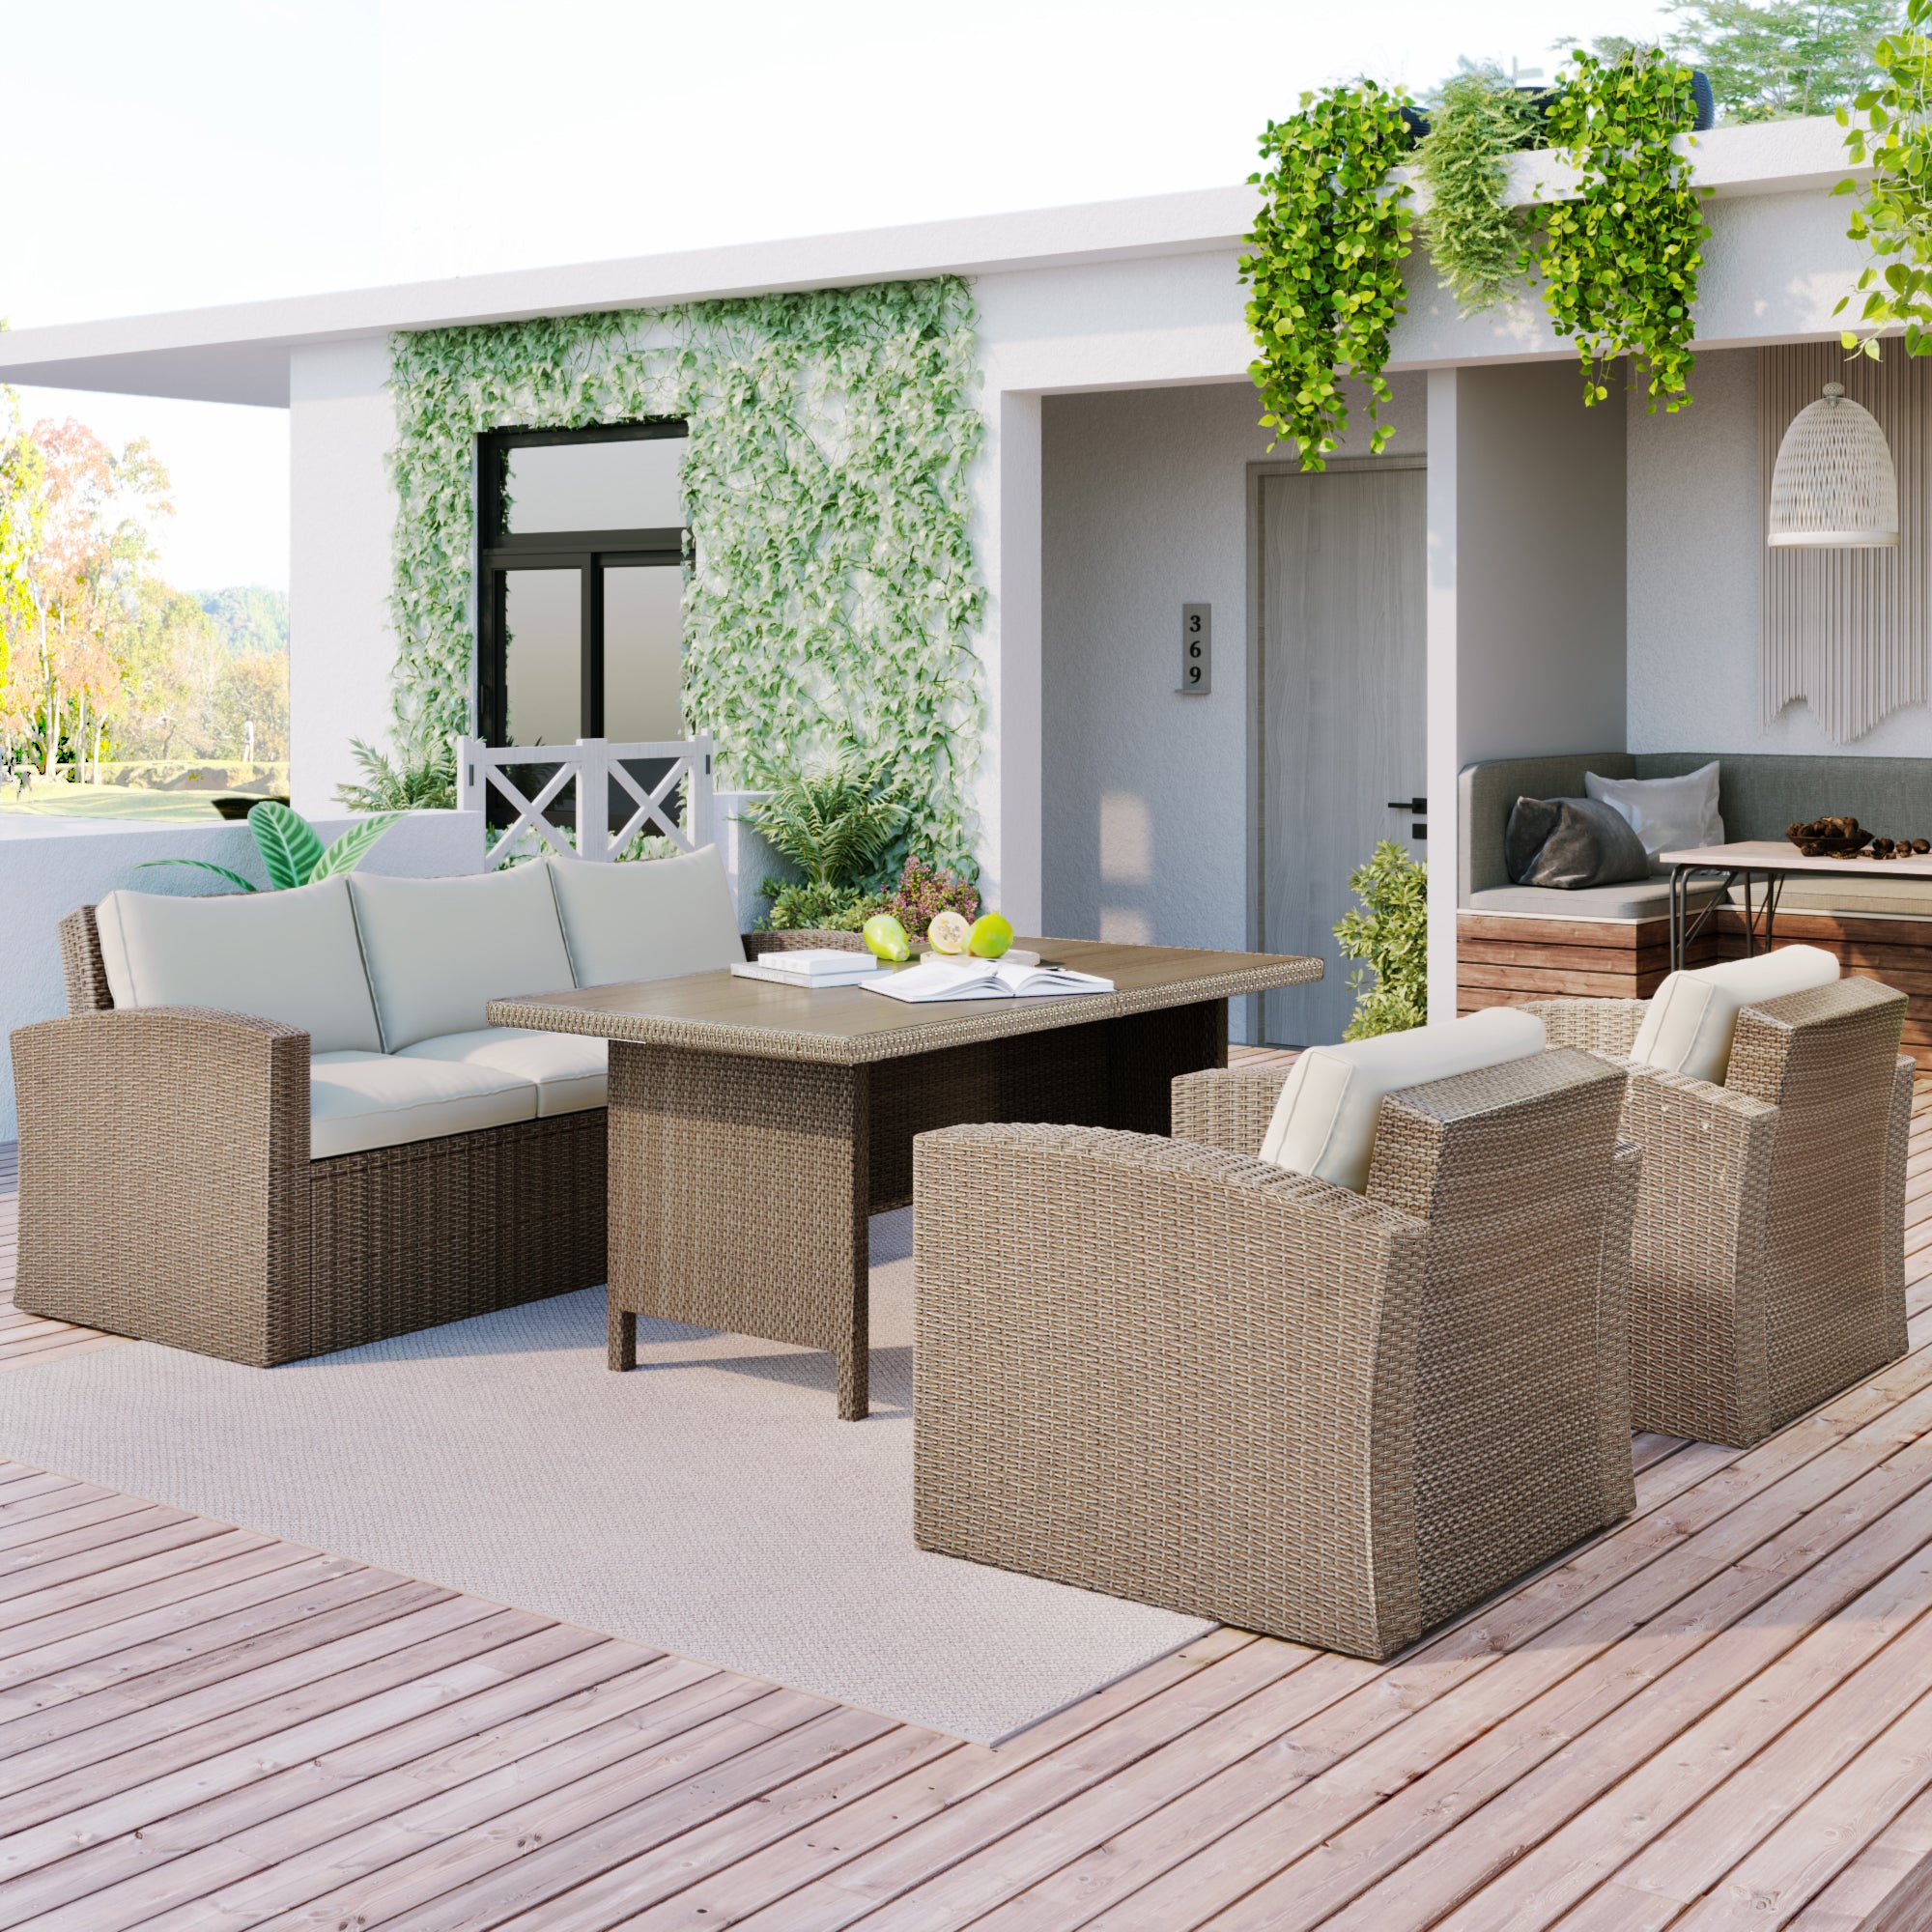 4-Piece Outdoor Conversation Set Wicker Furniture Sofa Set with Beige Cushions